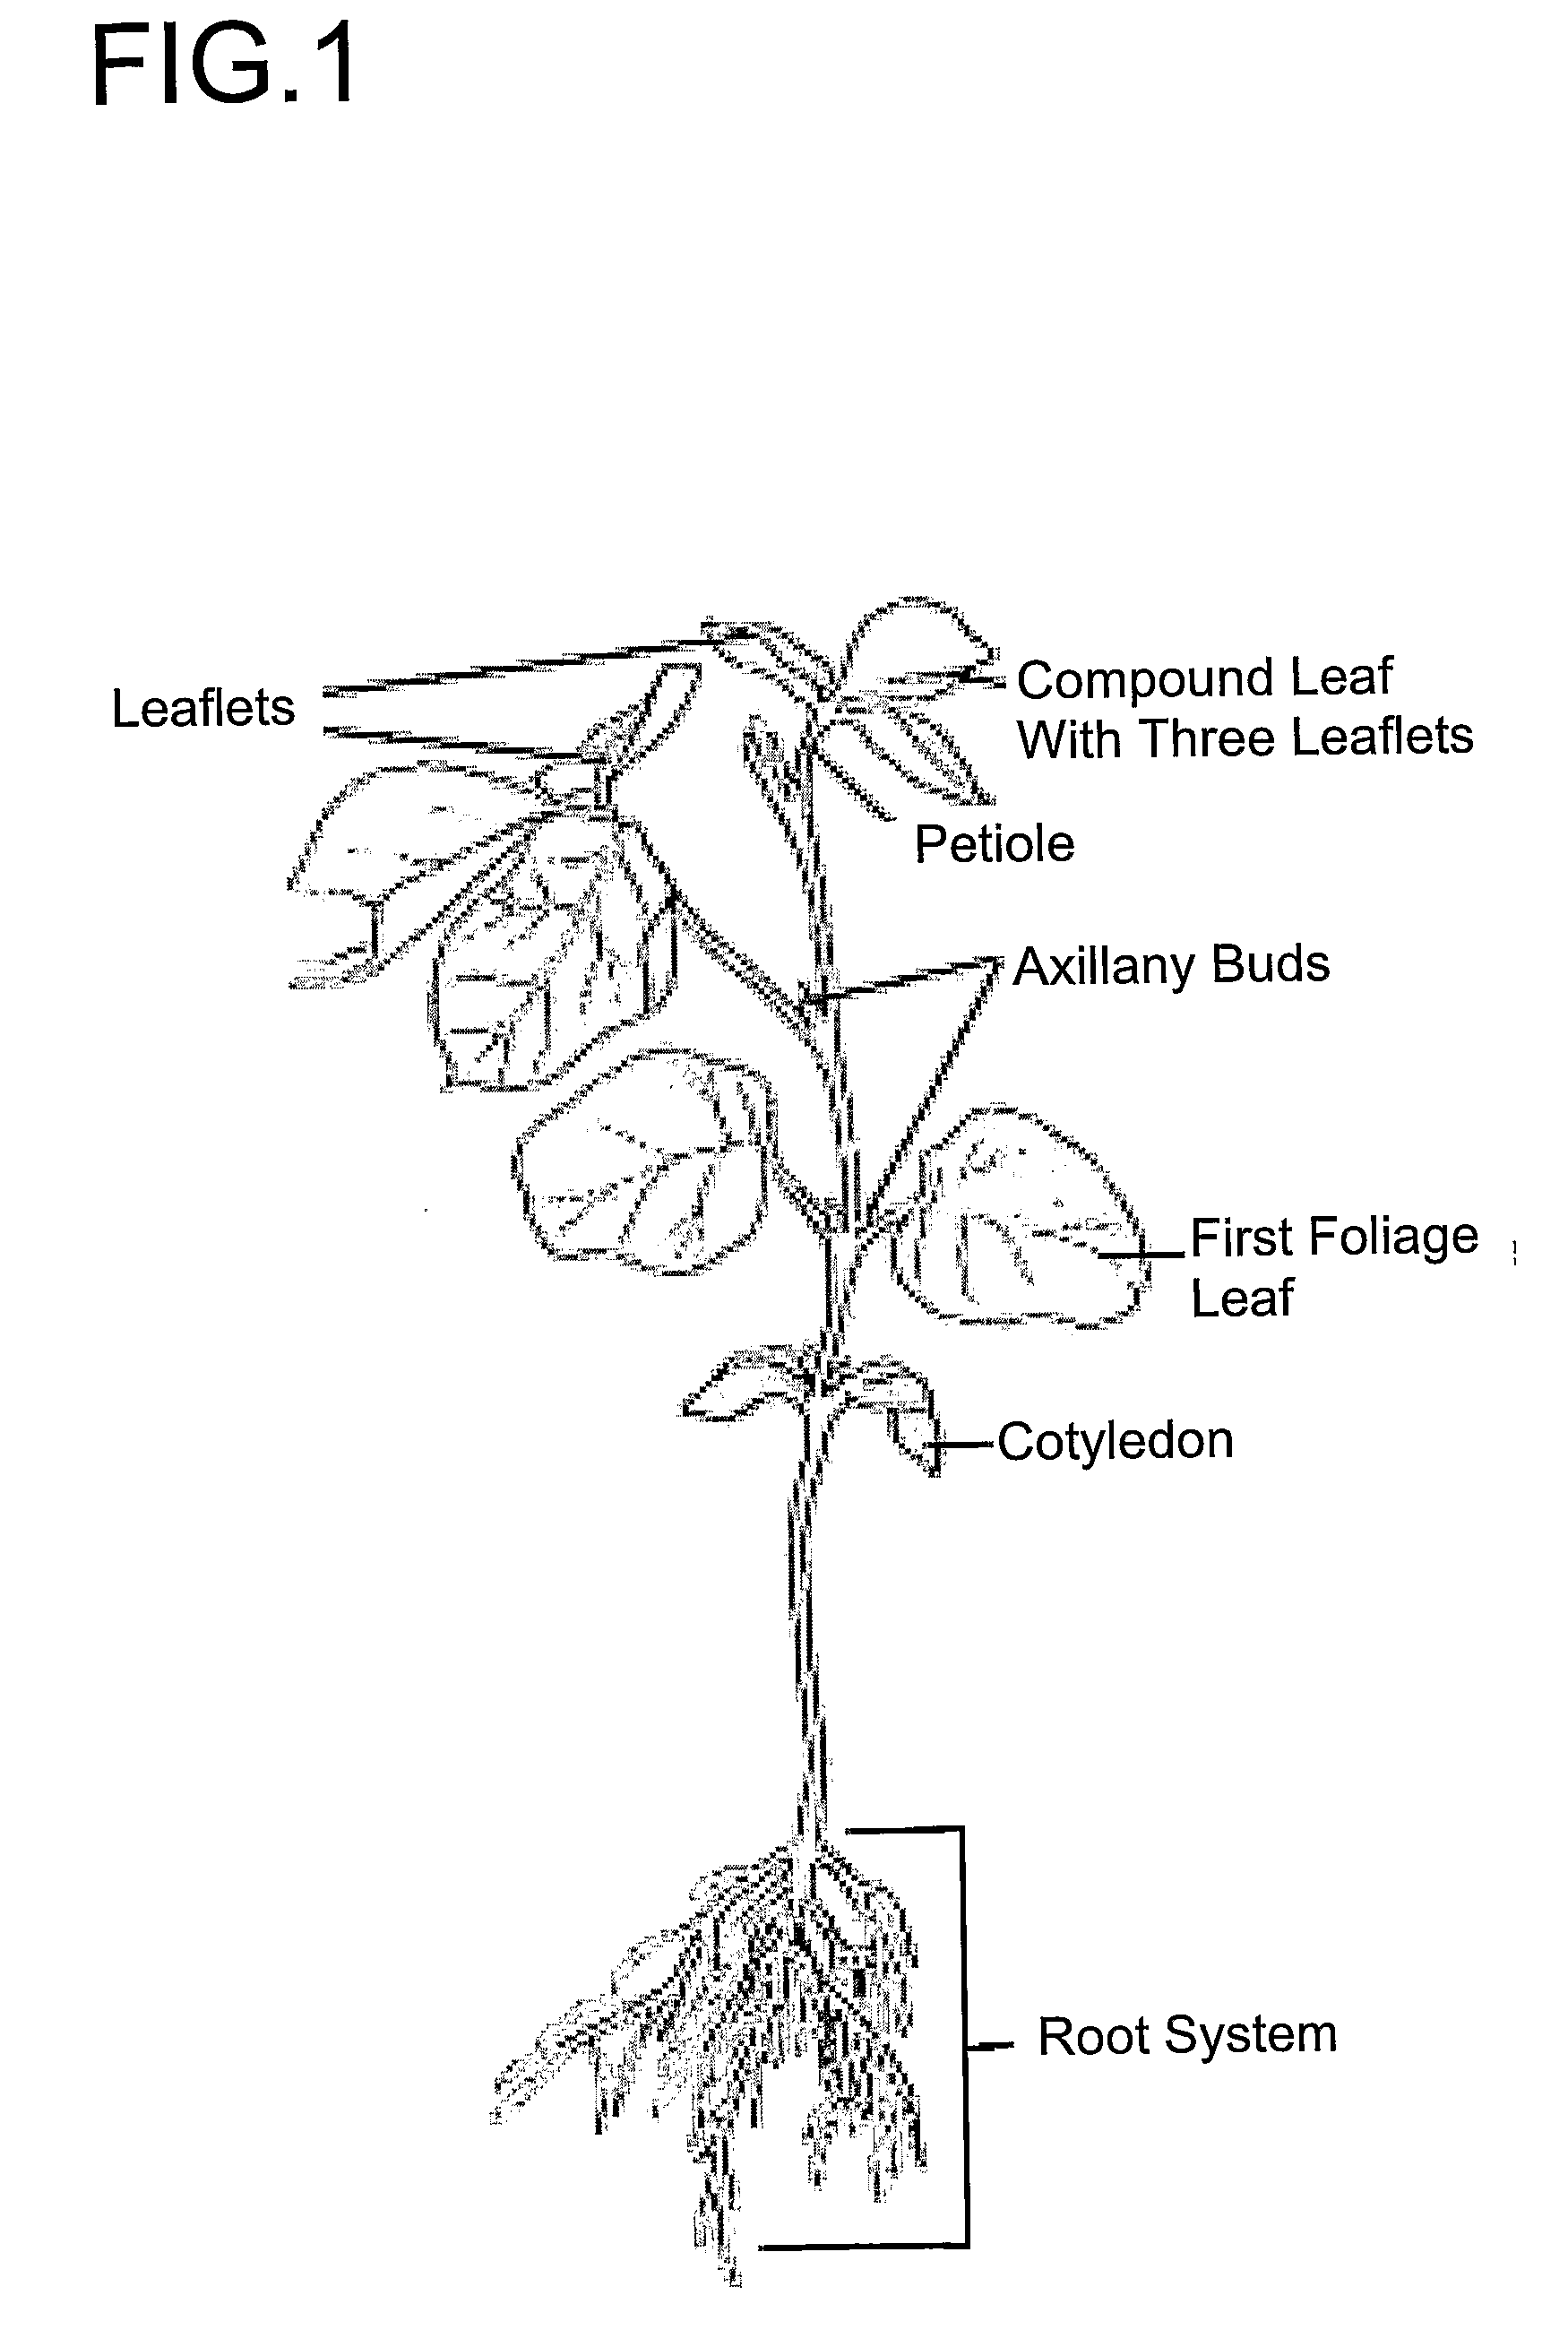 Transformation of soybean